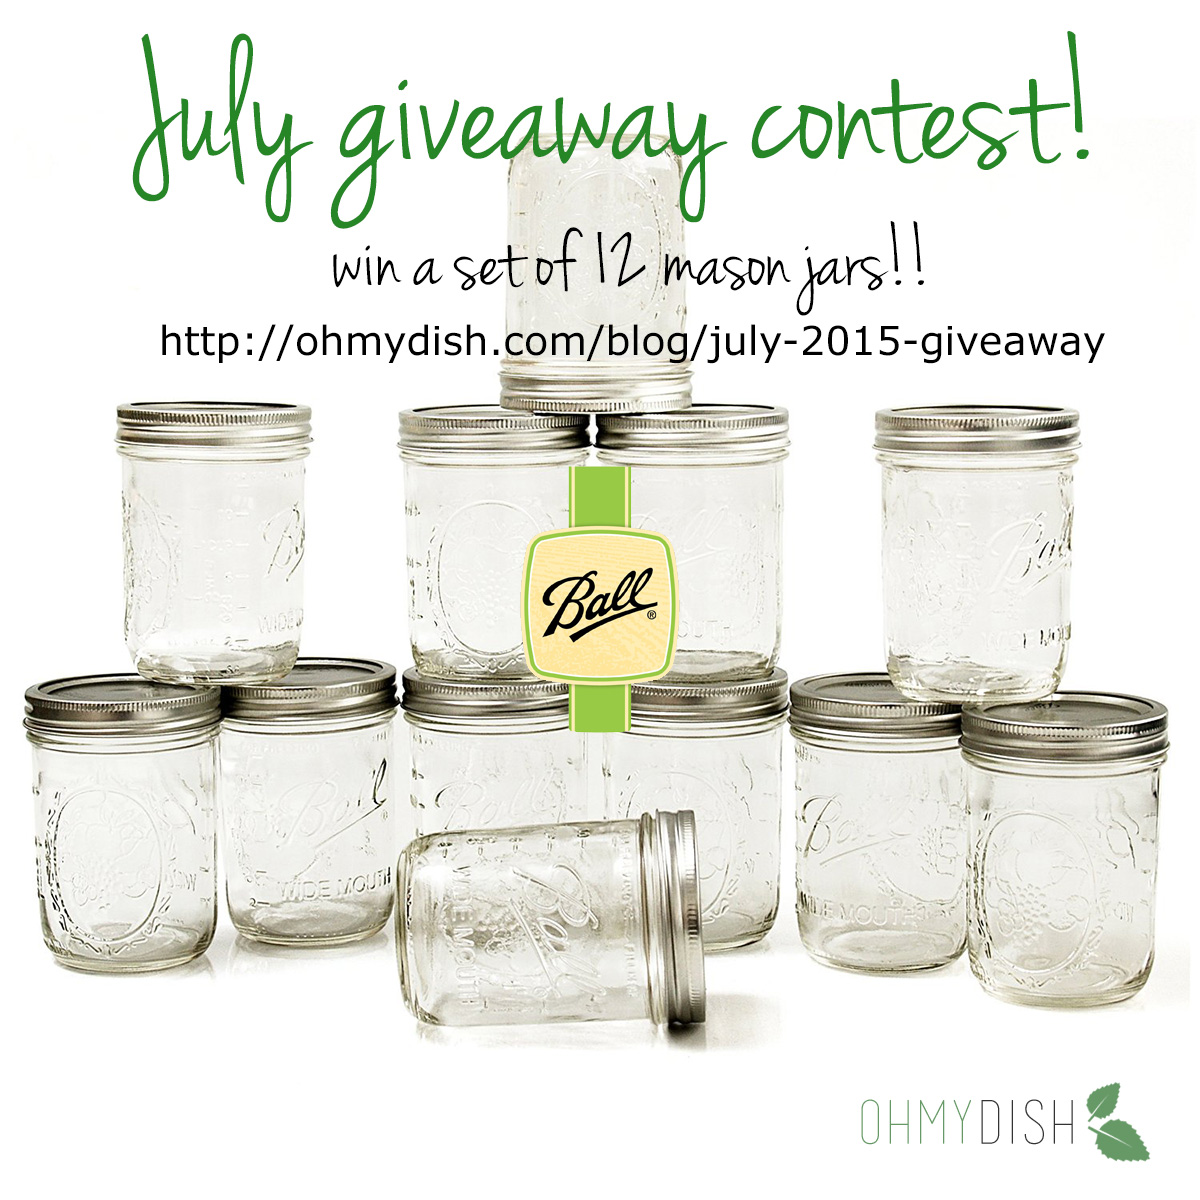 July 2015 giveaway contest - set of 12 glass preserving jars